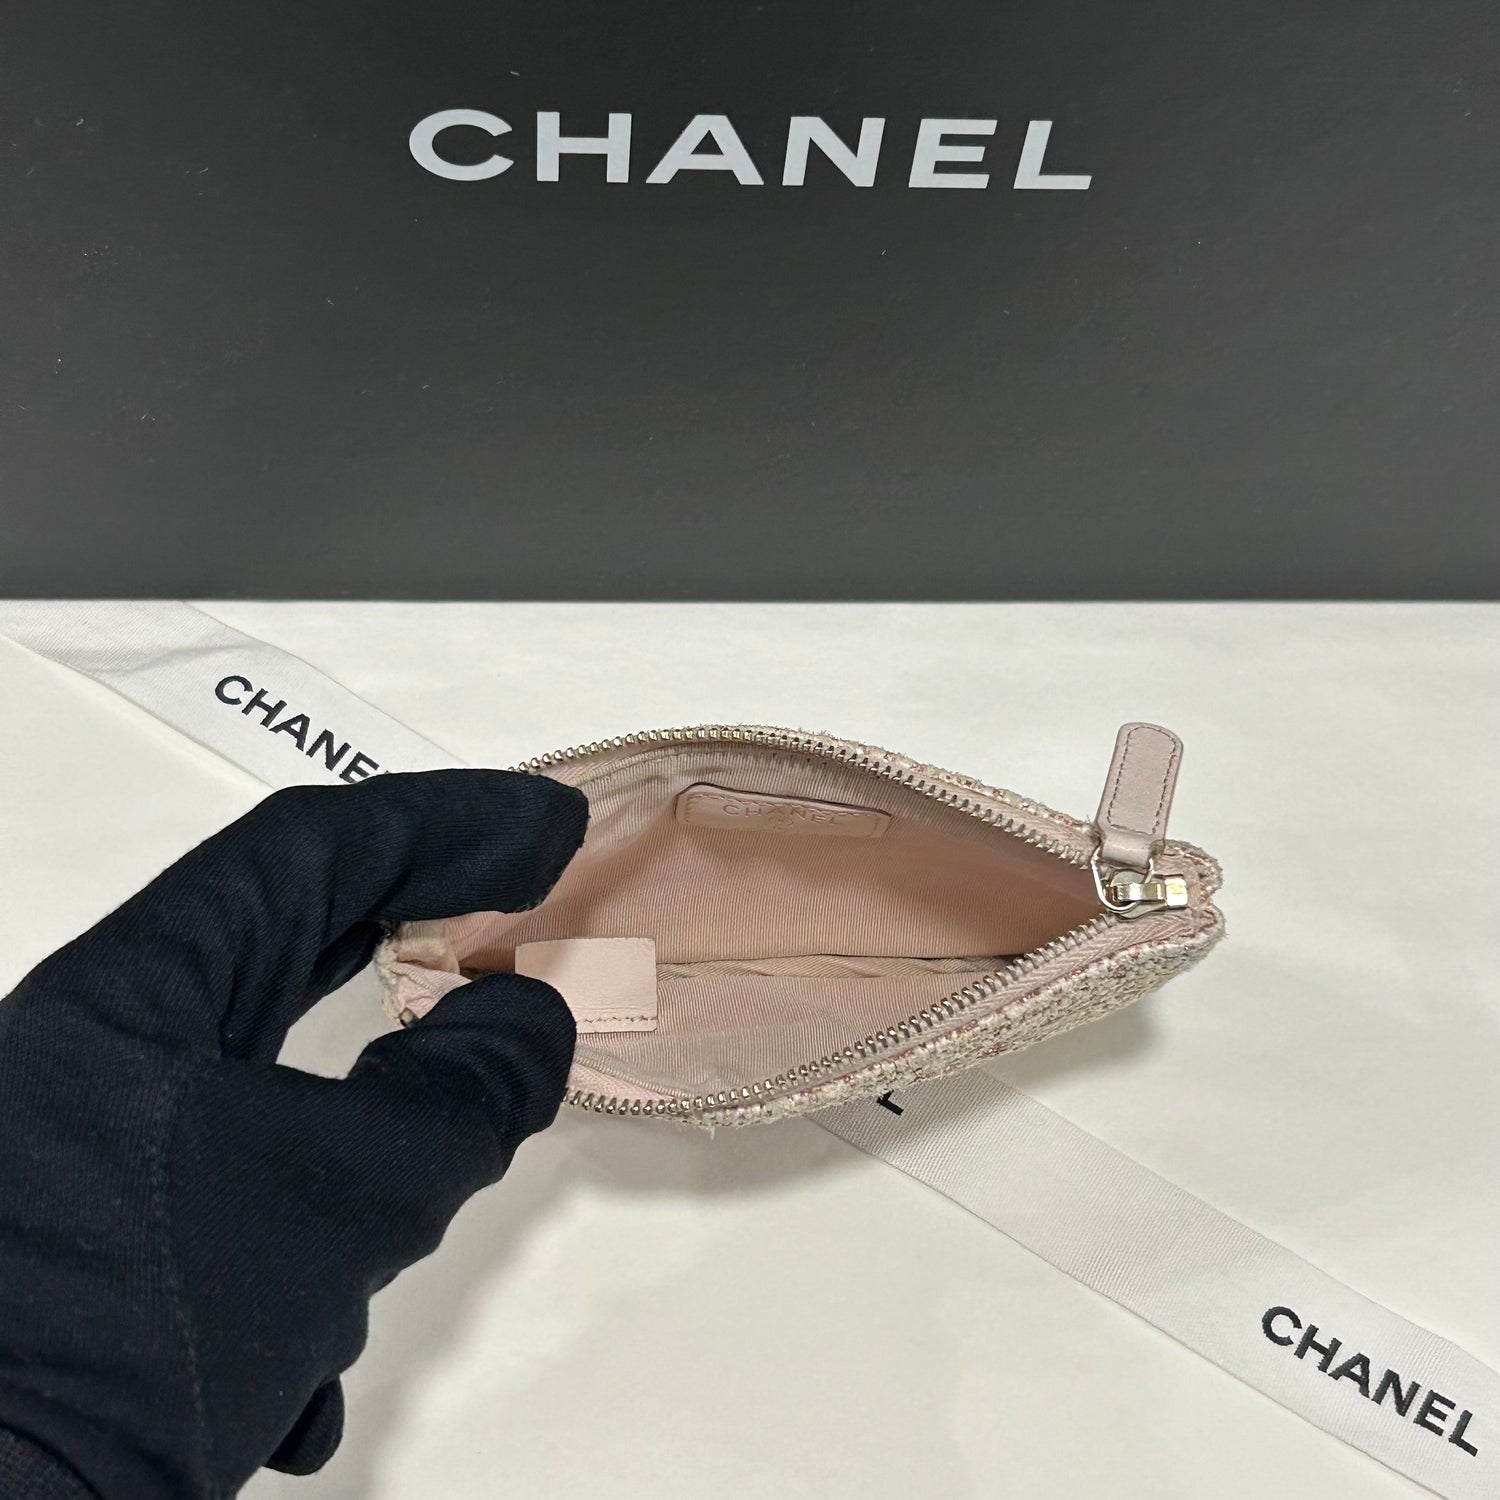 Chanel - Mini Clutch